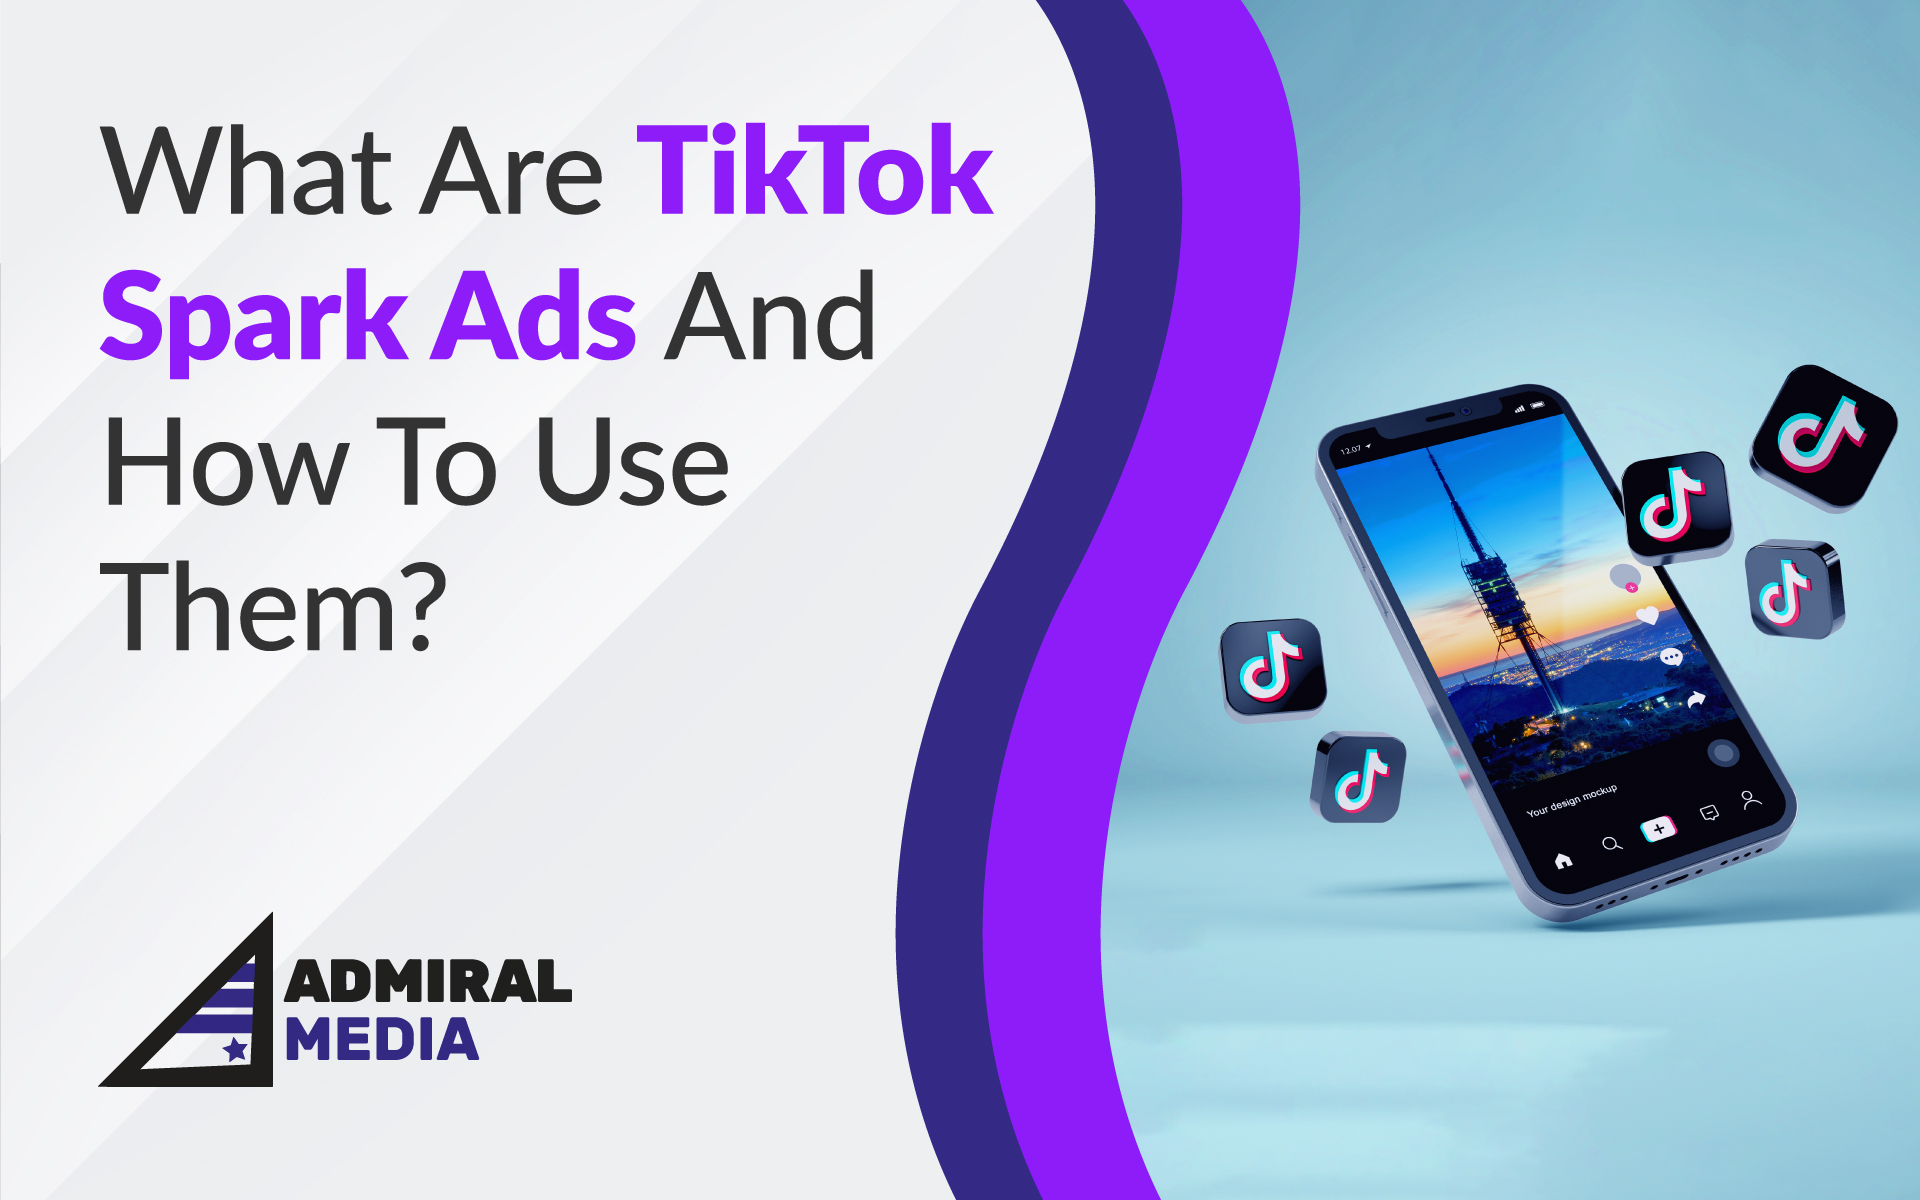 TikTok Spark Ads for Influencer Campaigns - Saulderson Newsletter - 13th  July